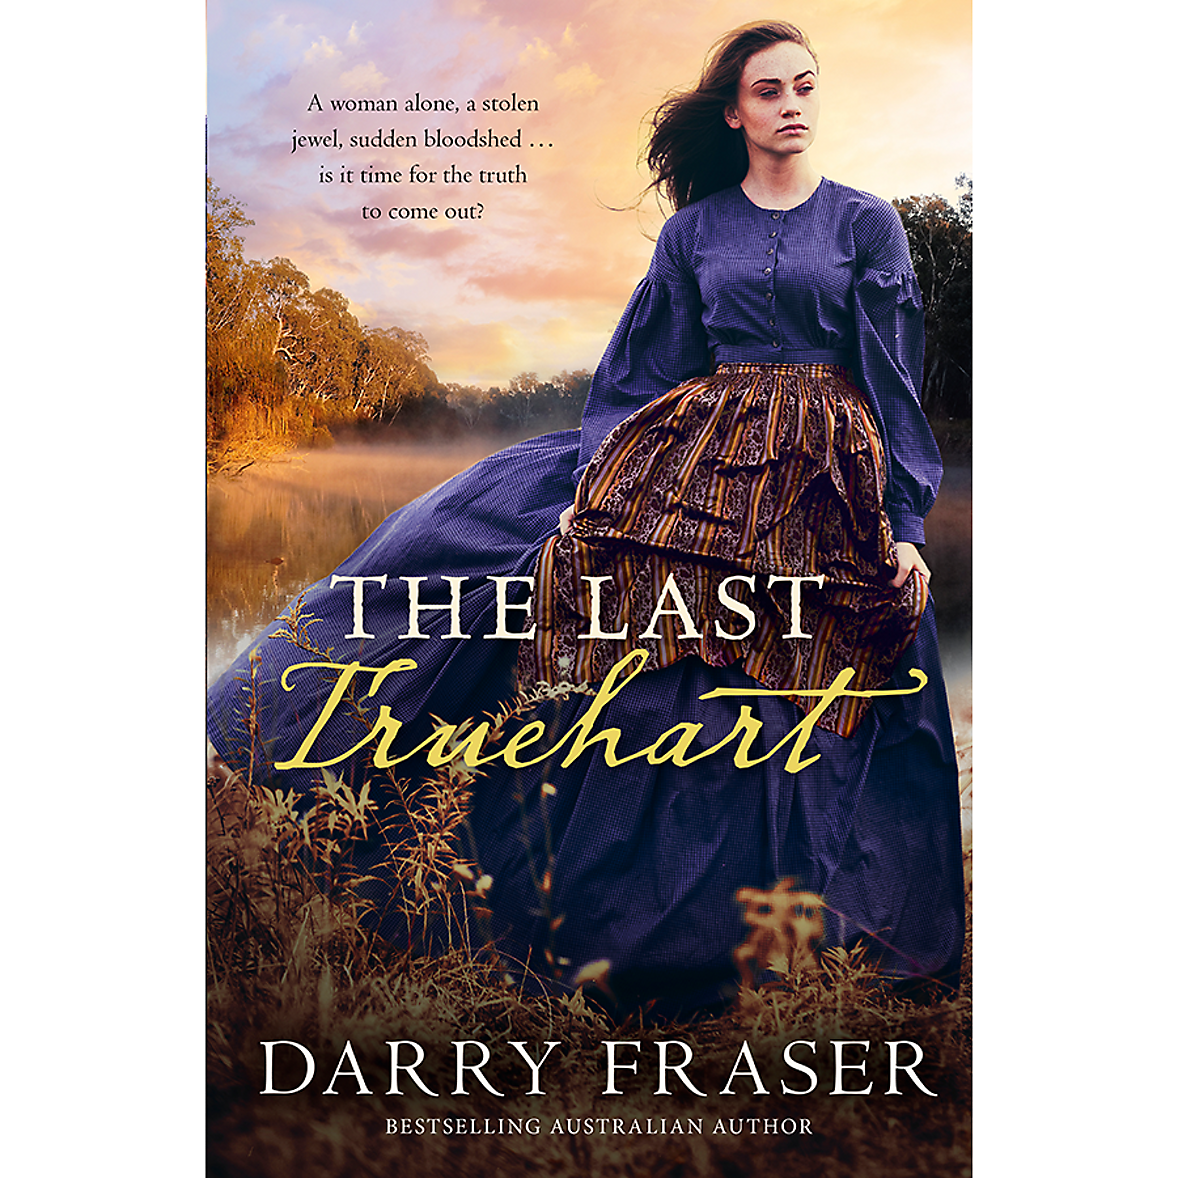 The Last Truehart by Darry Fraser